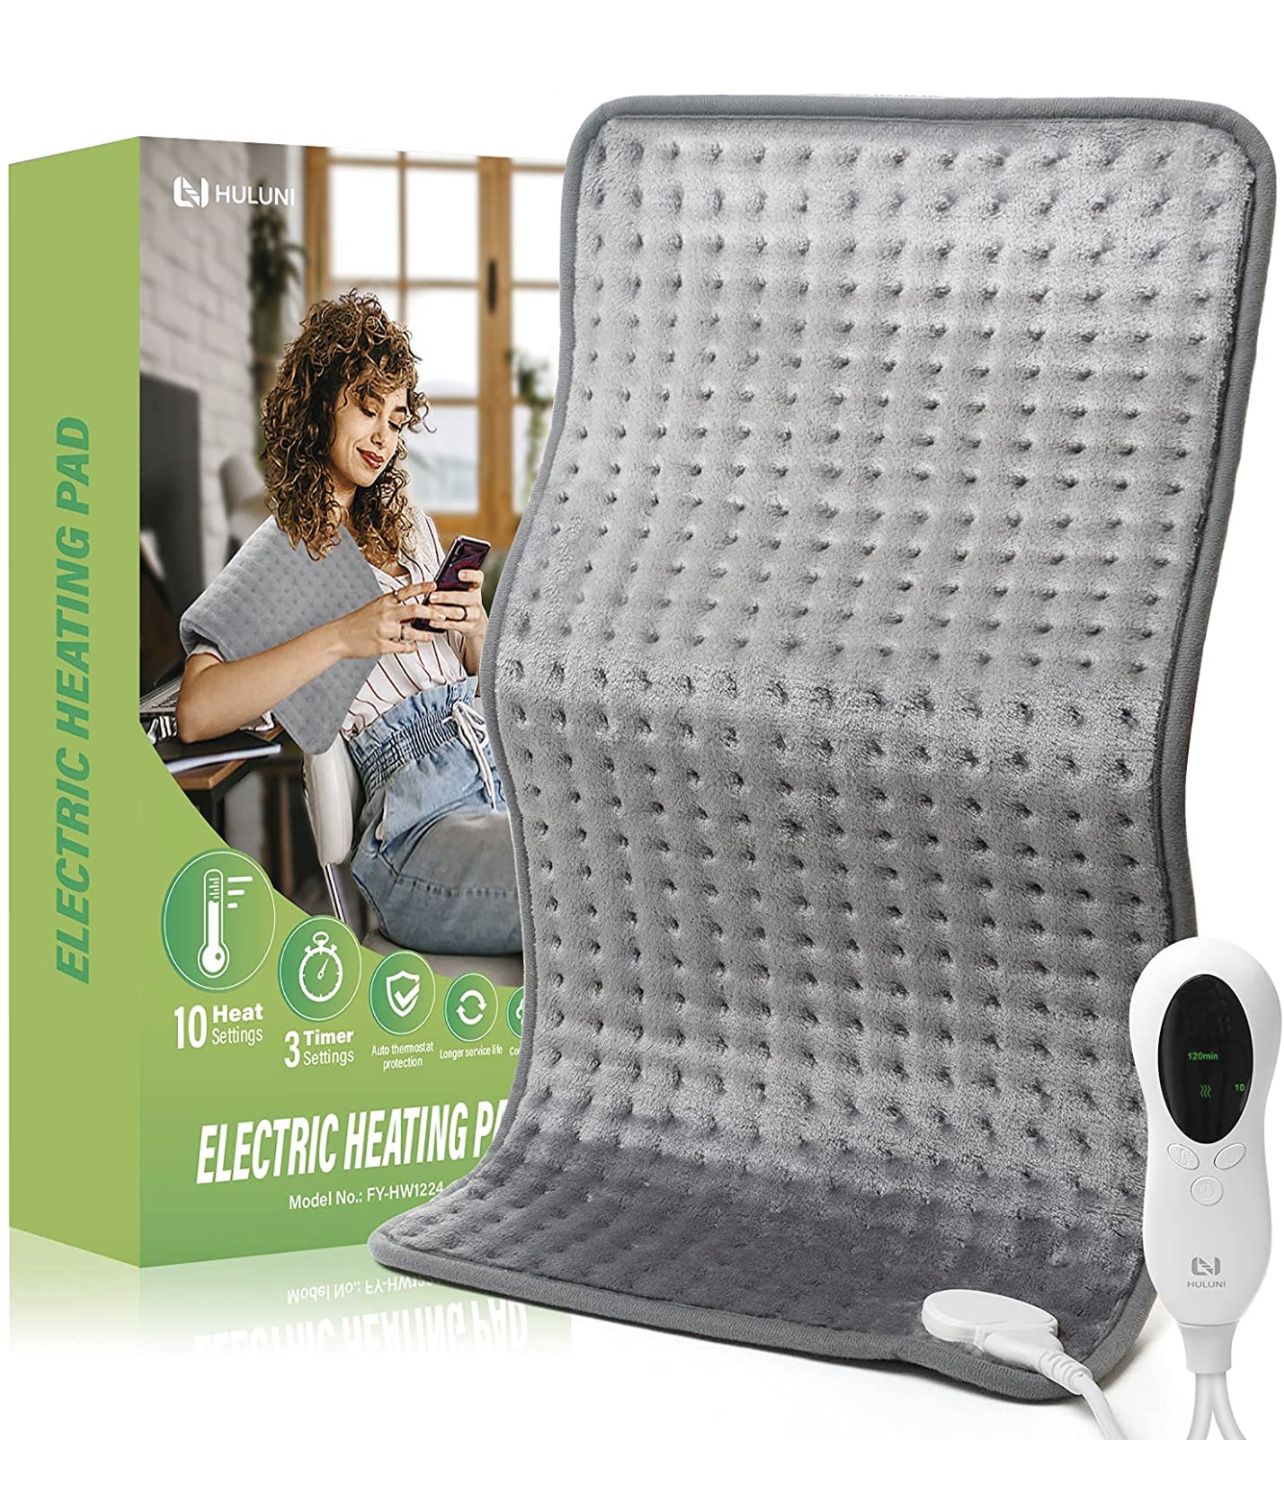 Electric Heating pad